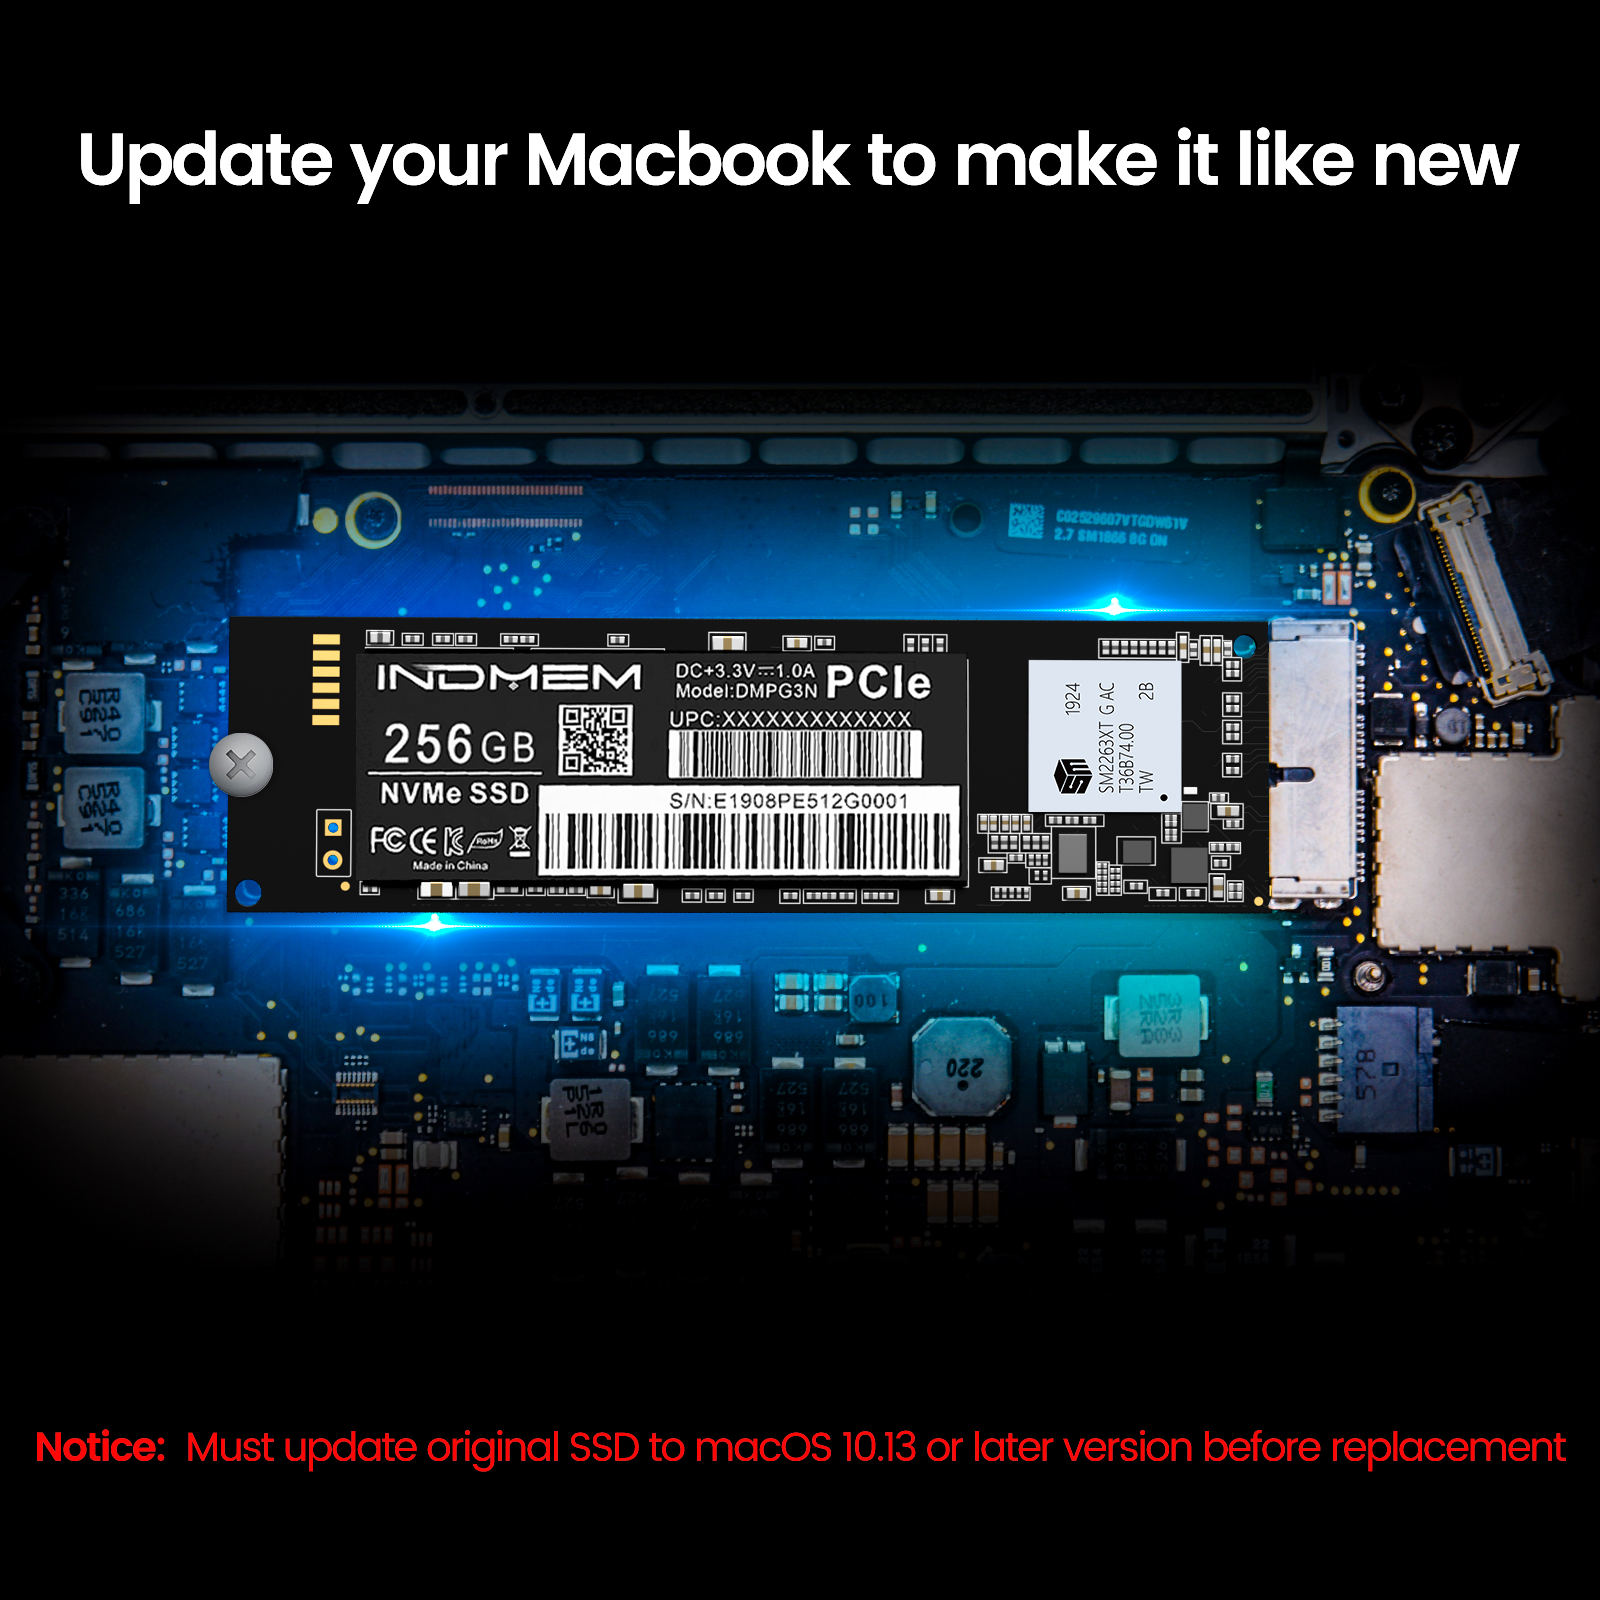 INDMEM PCIe NVME Gen3x4 SSD 3D TLC NAND Flash Hard Drive Replacement for Macbook Air, Macbook Pro Retina, iMac, Mac Pro, Mac Mini